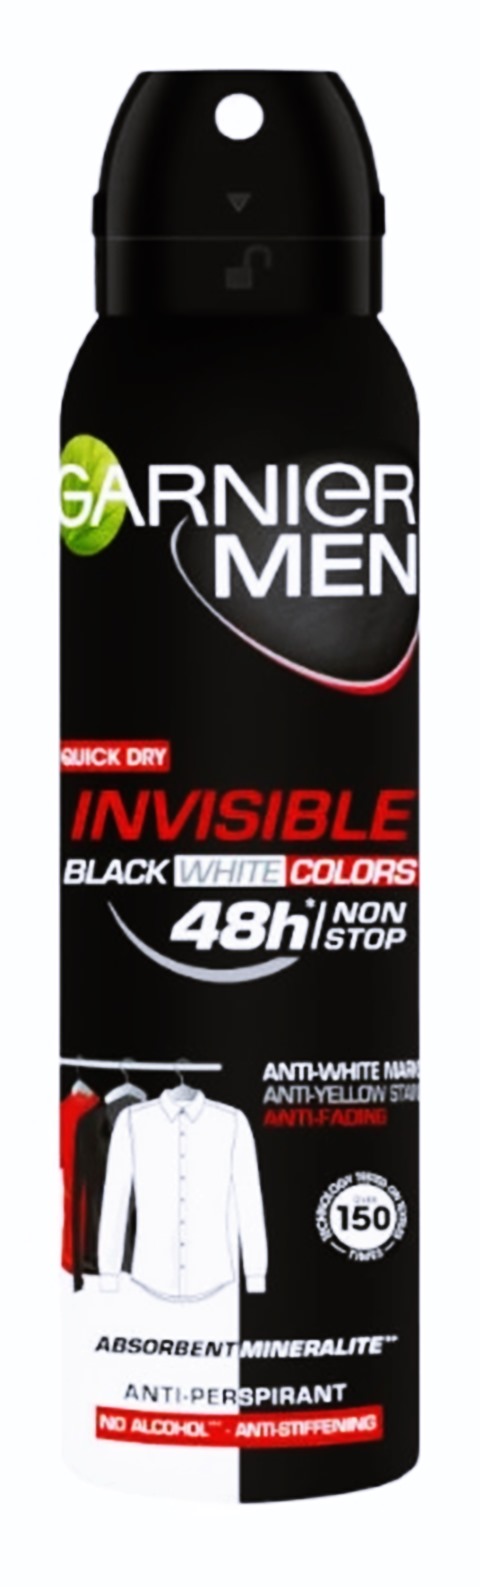 Дезодорант мъжки GARNIER invisible black and white colors 48h 150 ml